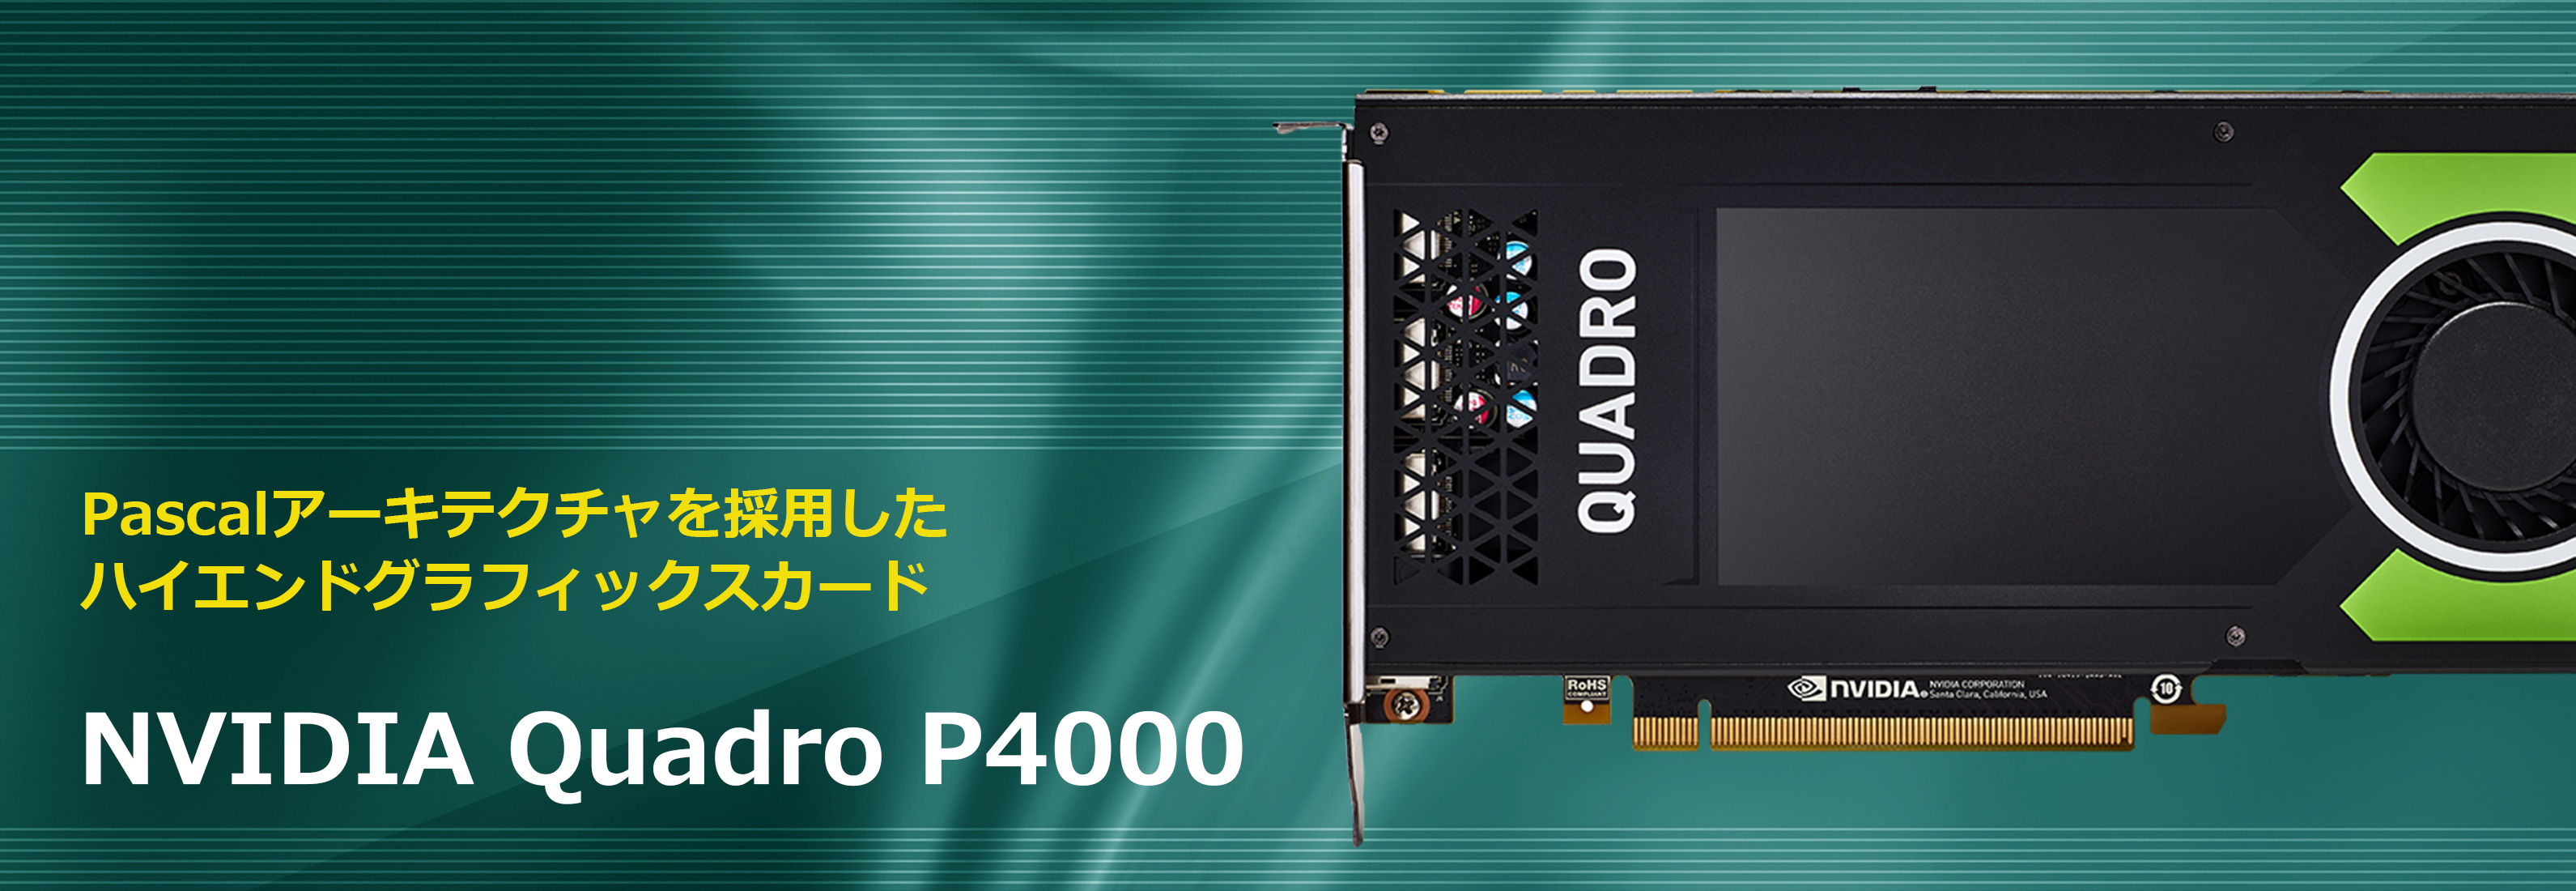 NVIDIA Quadro P4000 | 菱洋エレクトロ株式会社 - NVIDIA製品情報